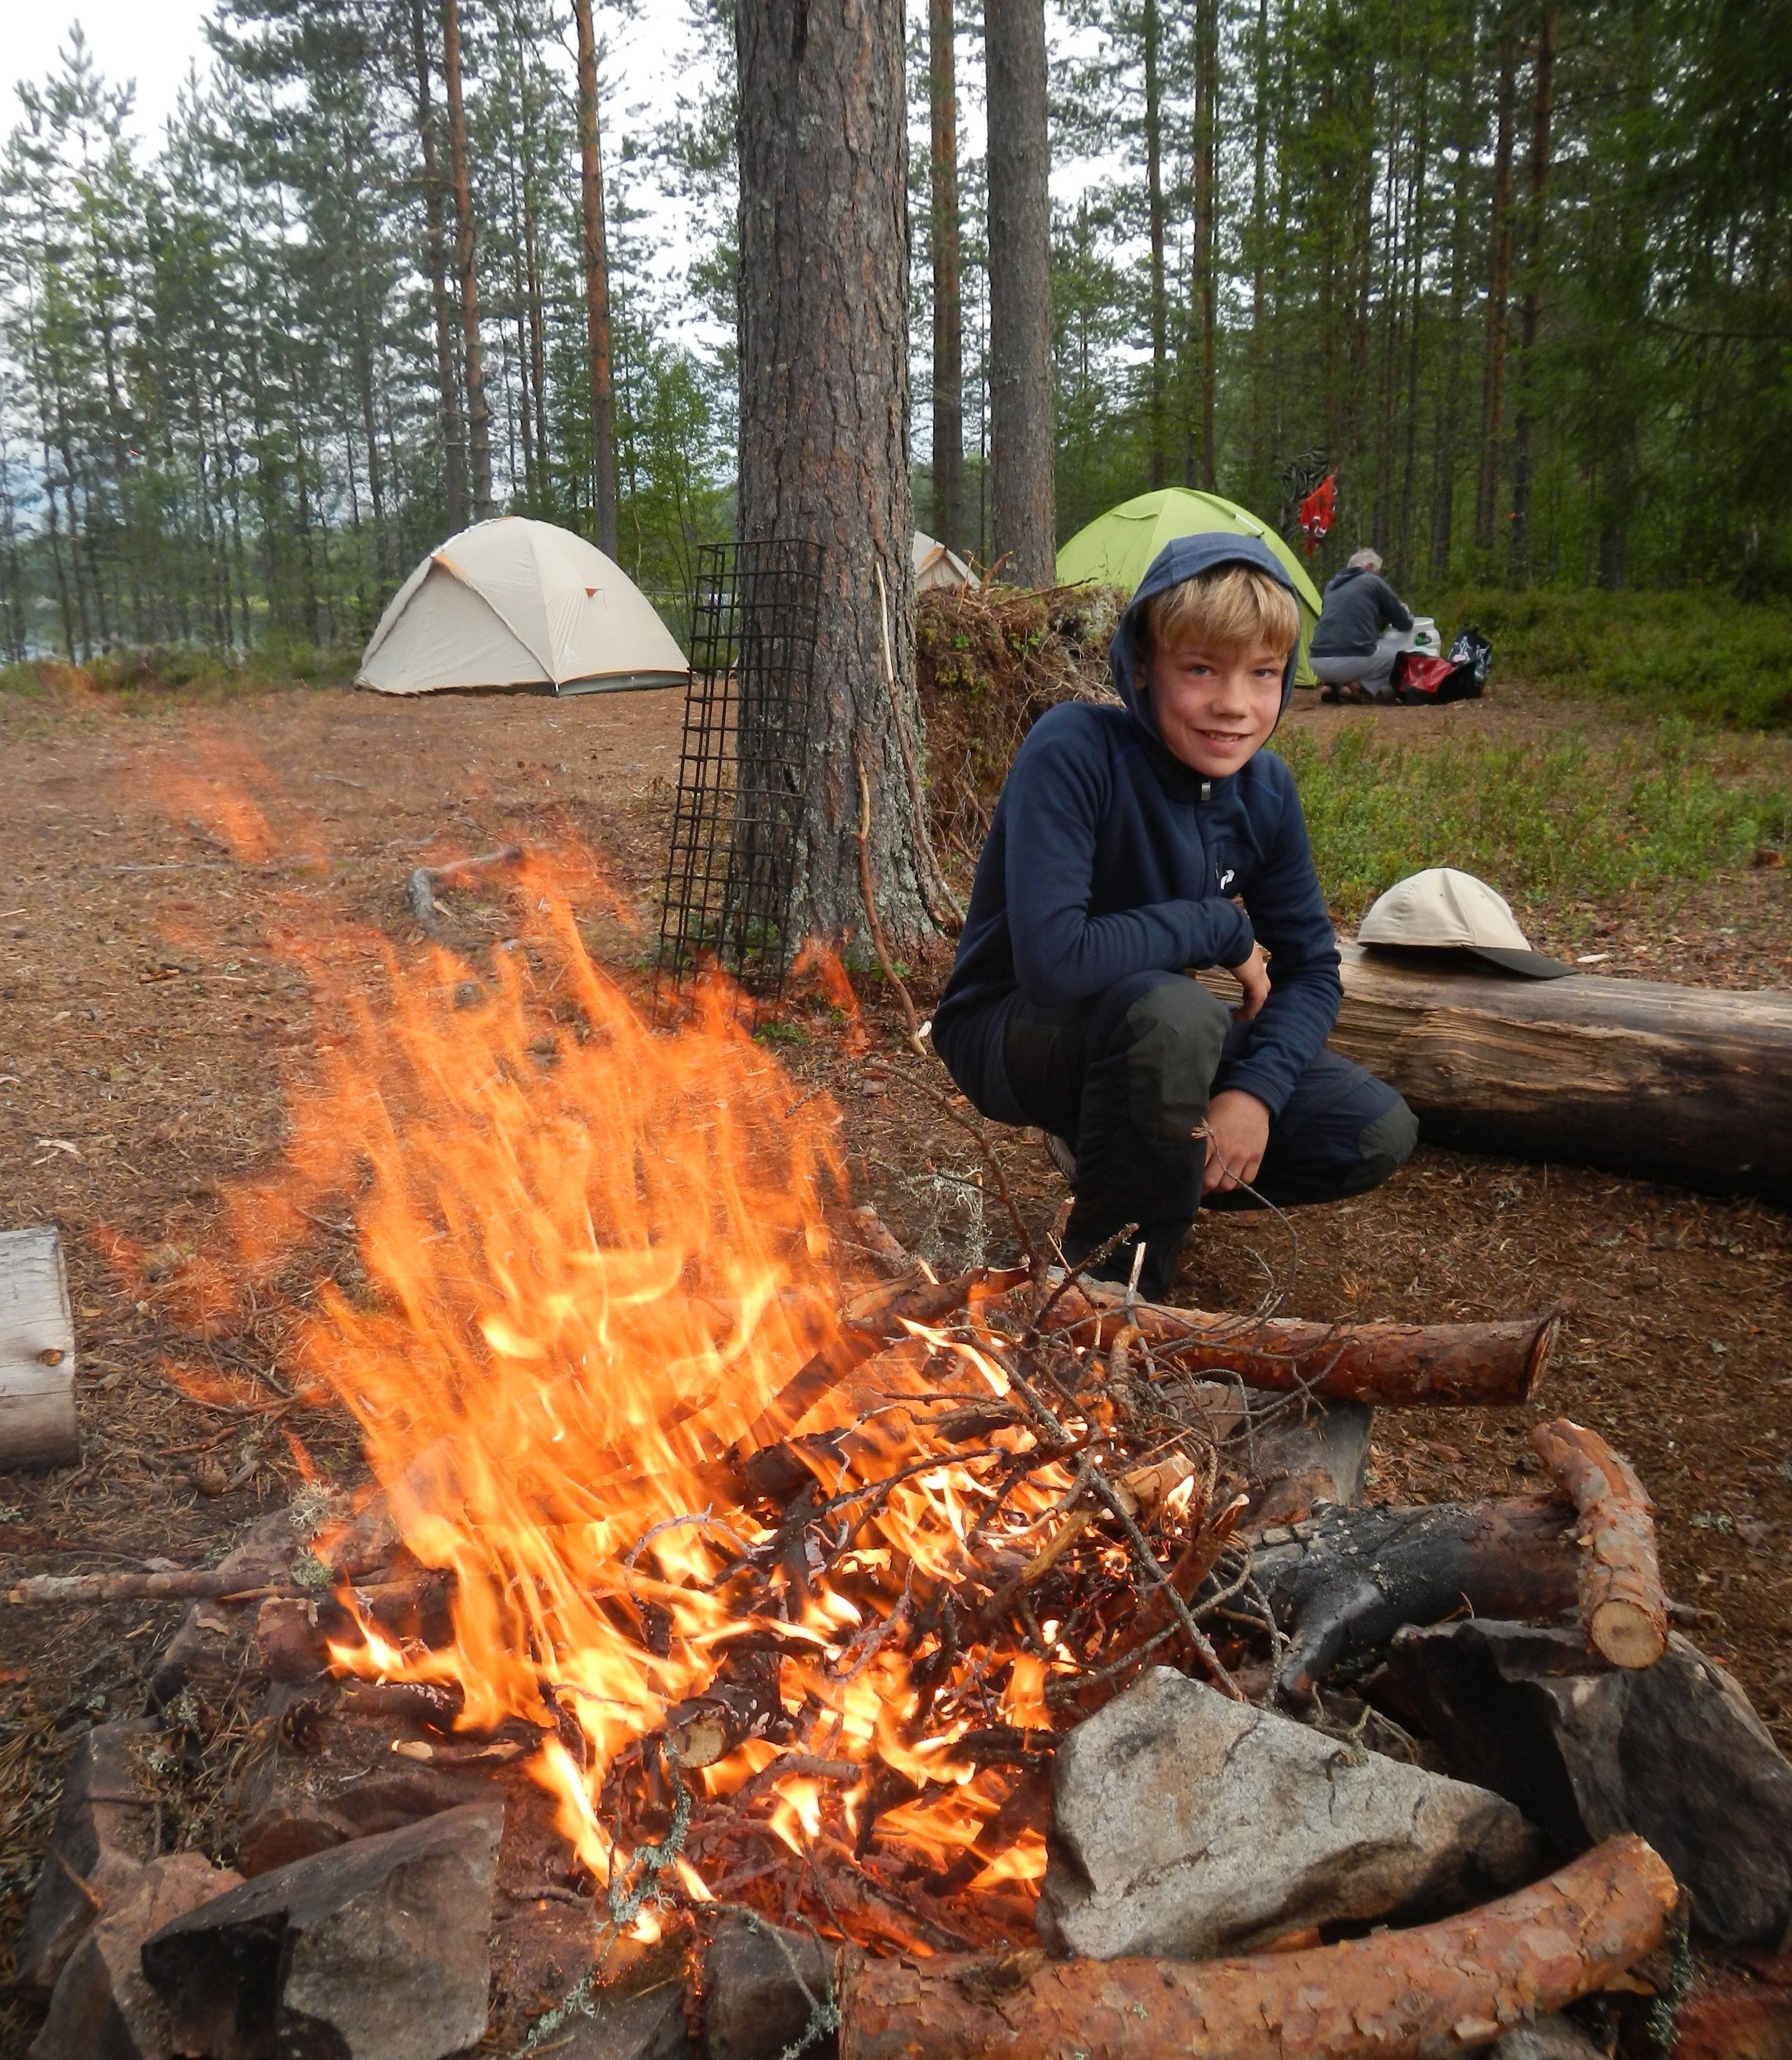 Kanu Urlaub mit Kindern - Familienurlaub im Kanu - Junge am Lagerfeuer